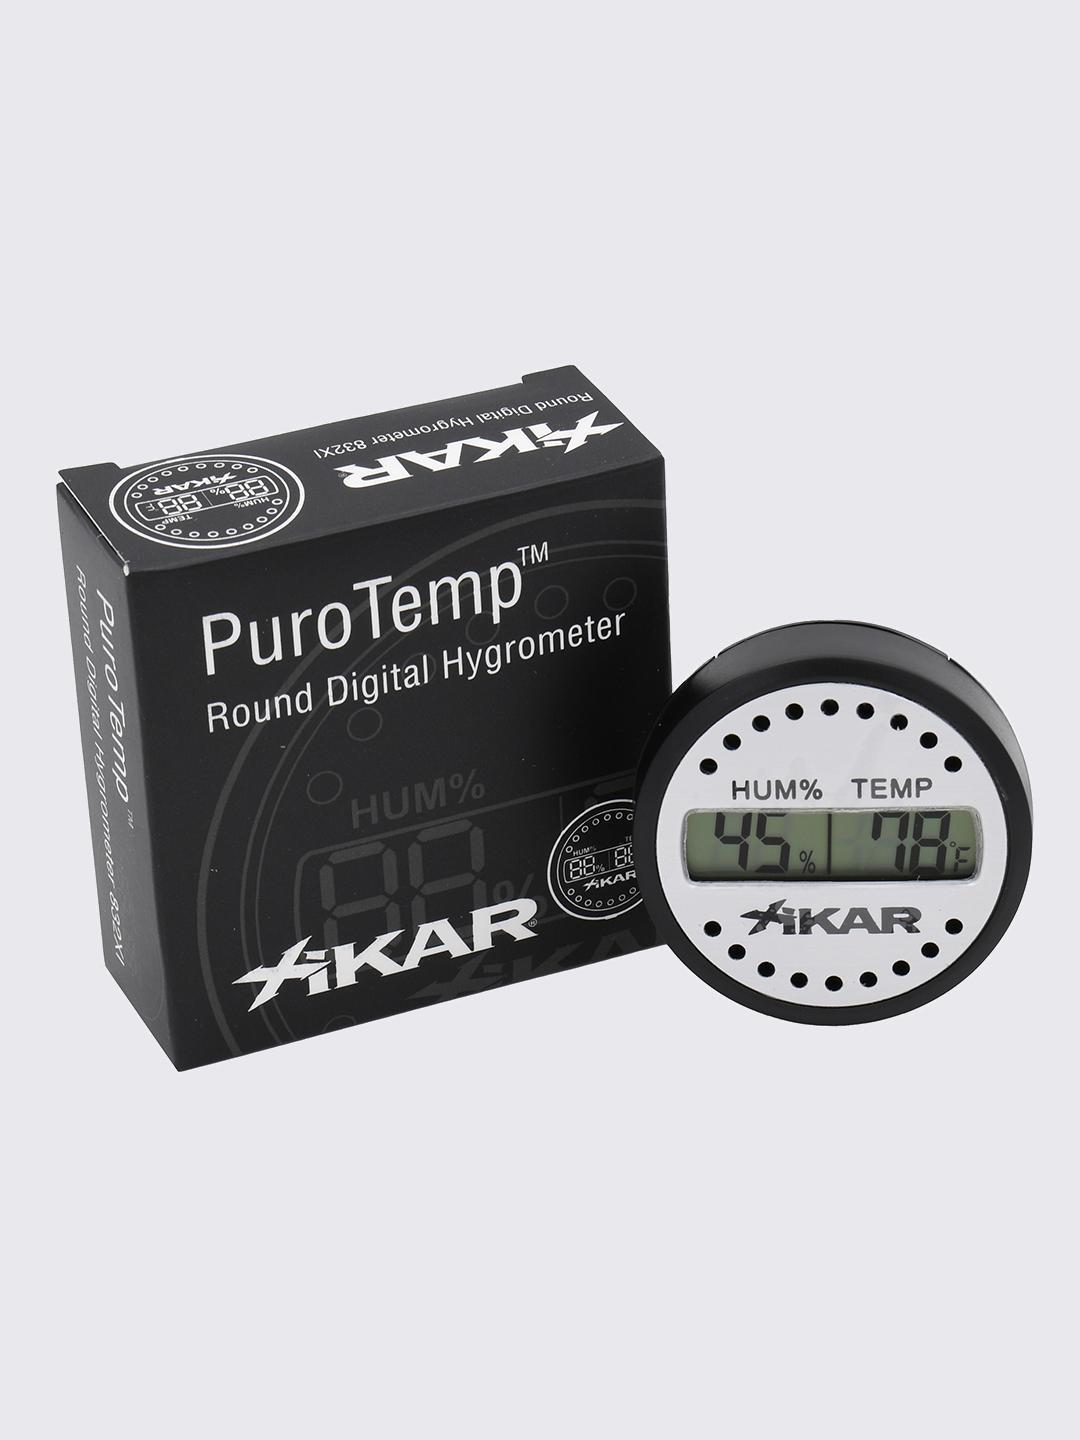 Quality Importers HygroSet II Digital Hygrometer - Cigar Accessory Review